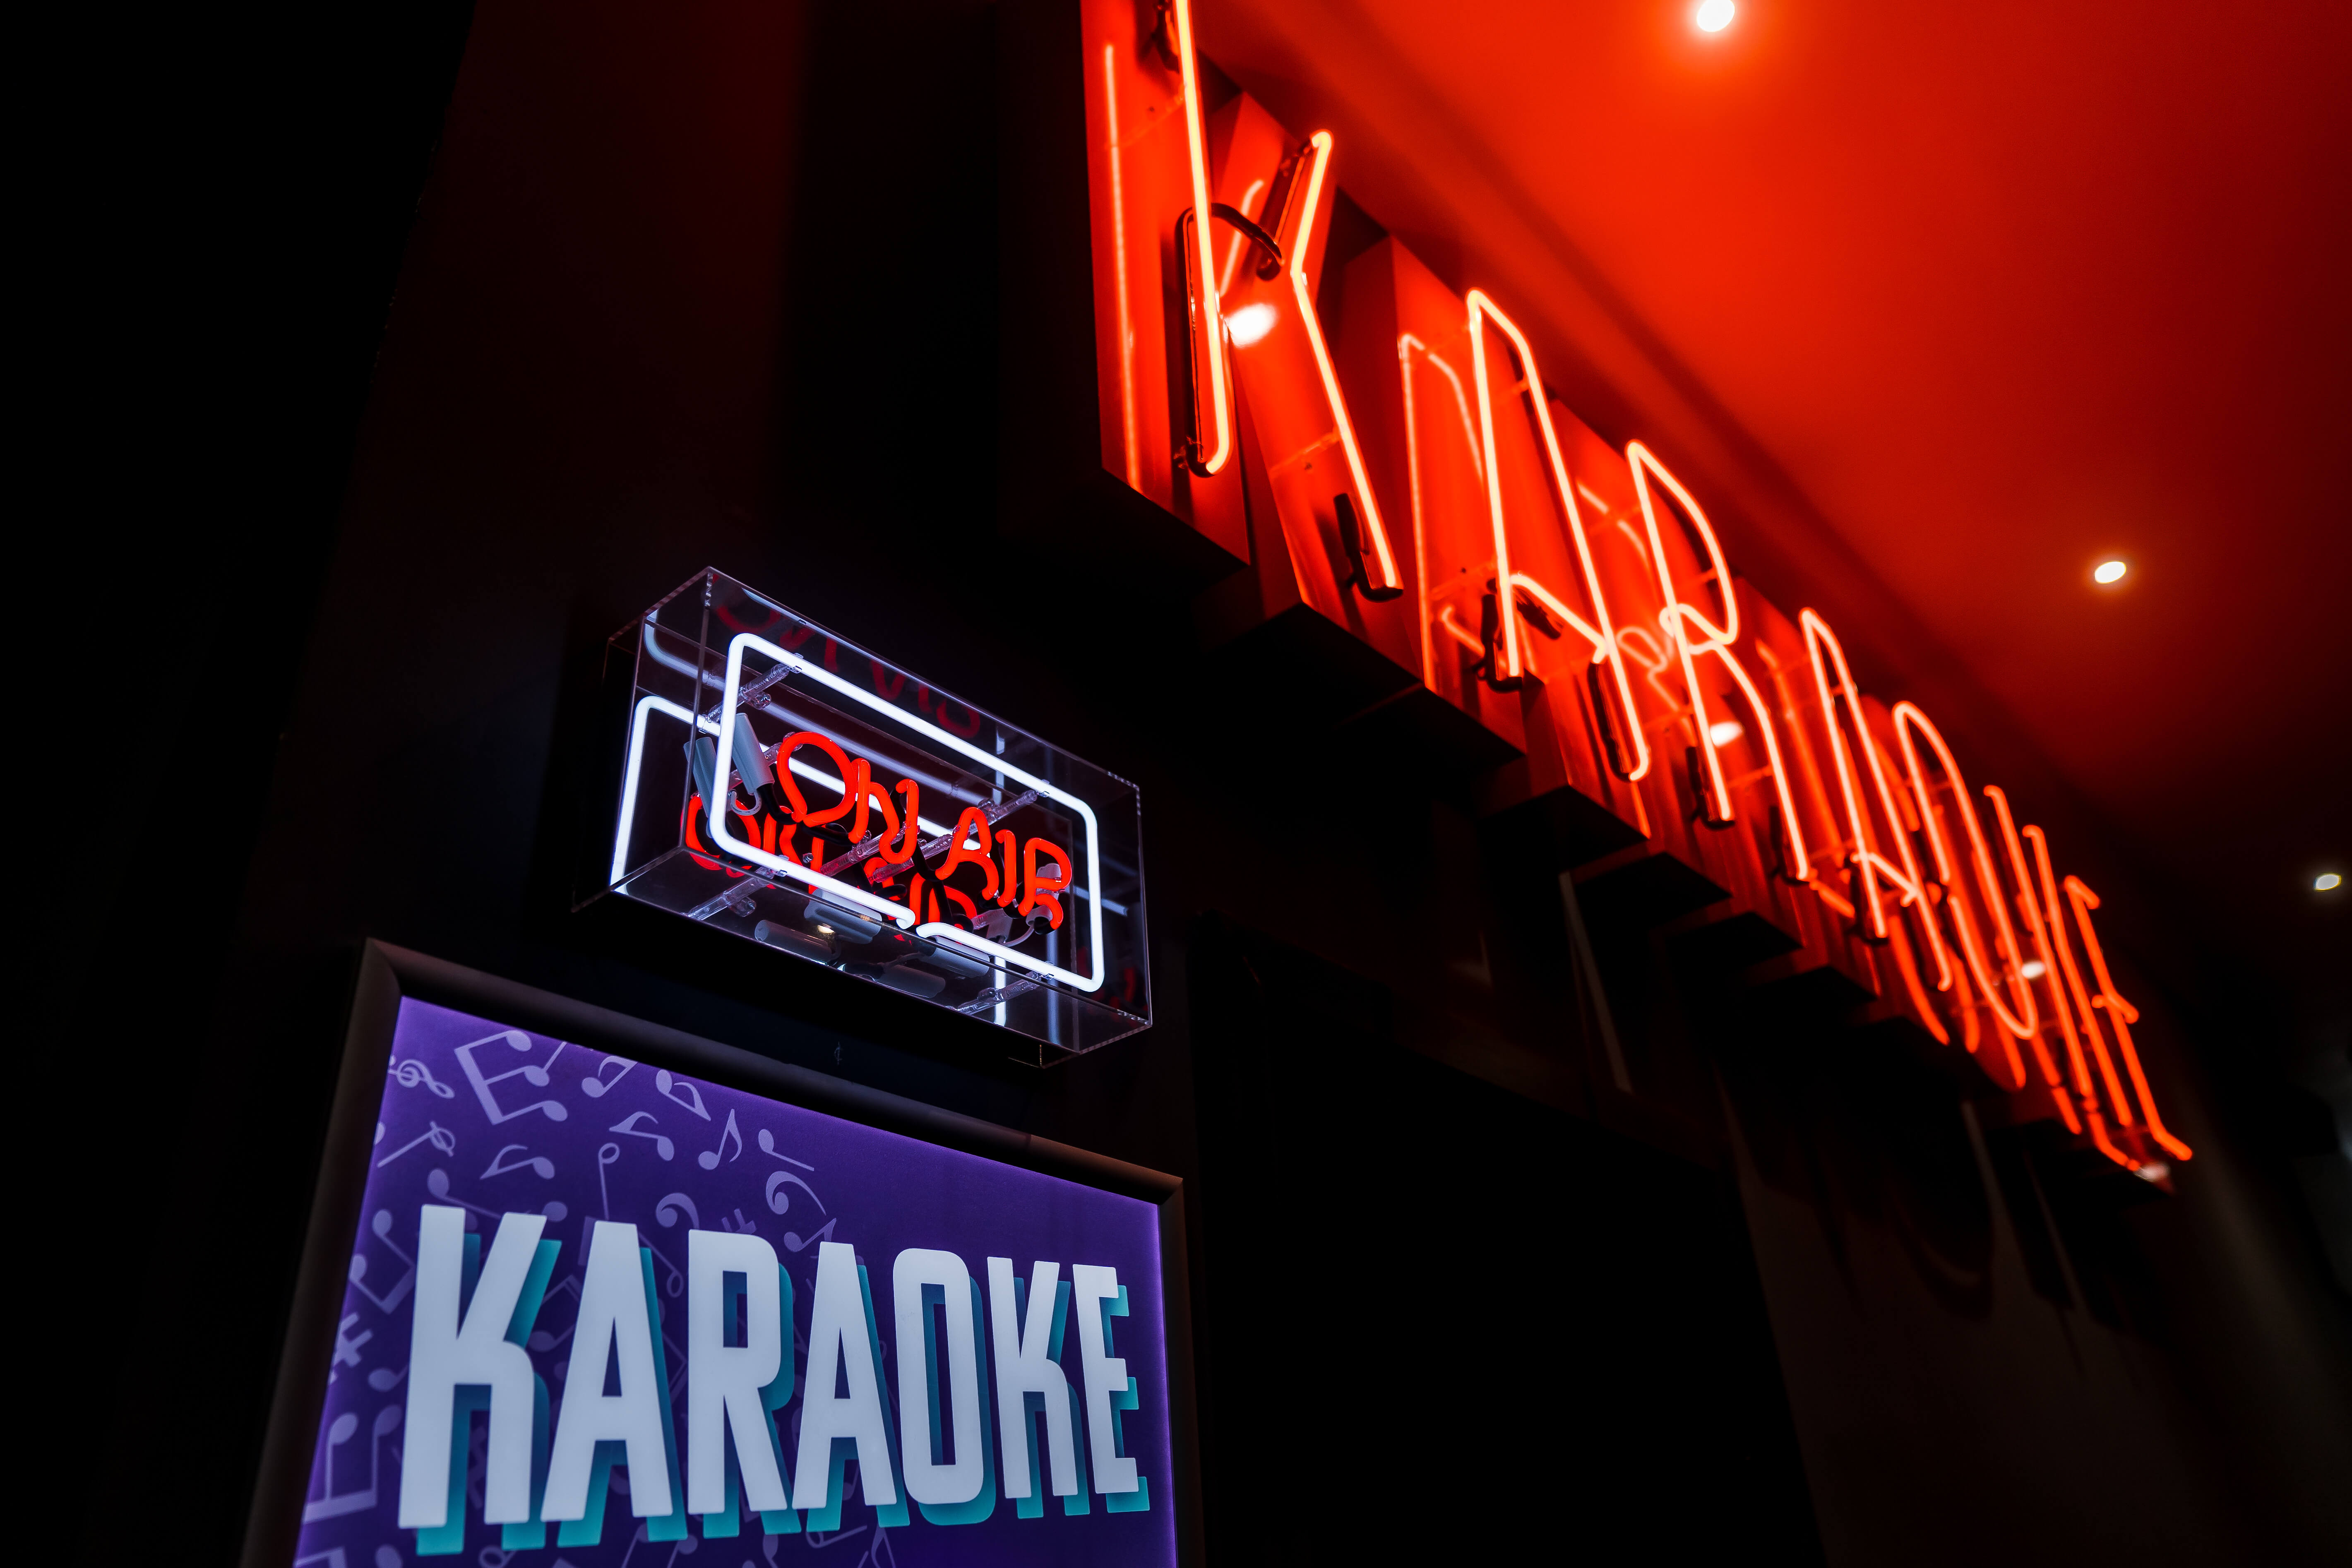 Karaoke On Air Neon Sign 2